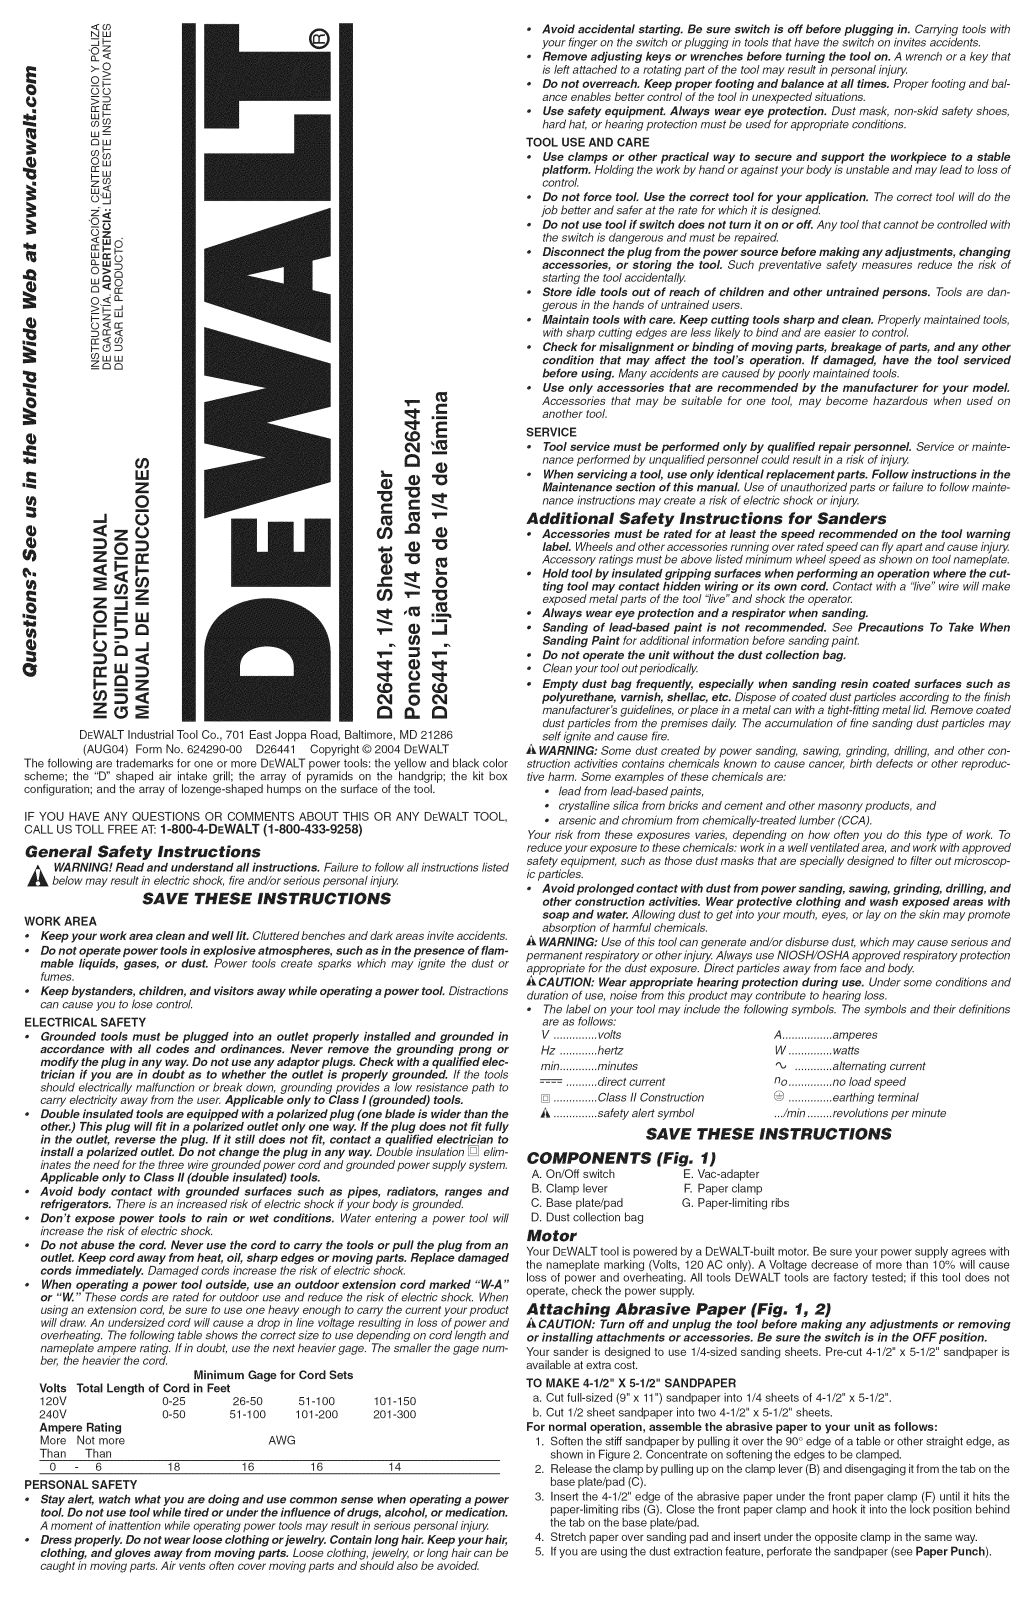 DeWalt D26441 TYPE 1 Owner’s Manual